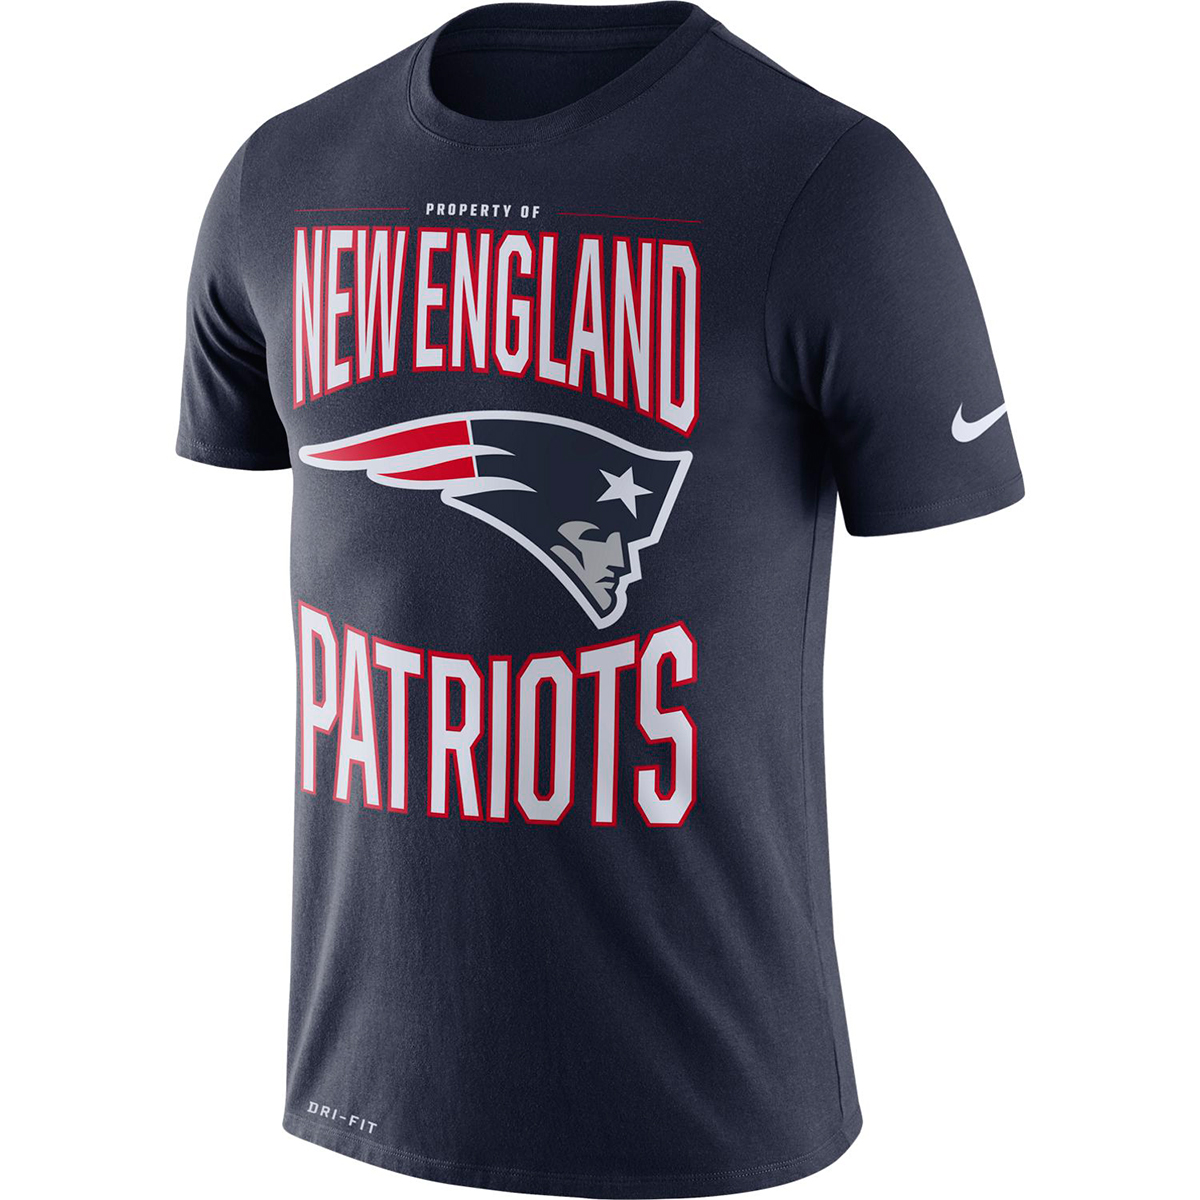 New England Patriots Men's Nike Property Of Short-Sleeve Tee